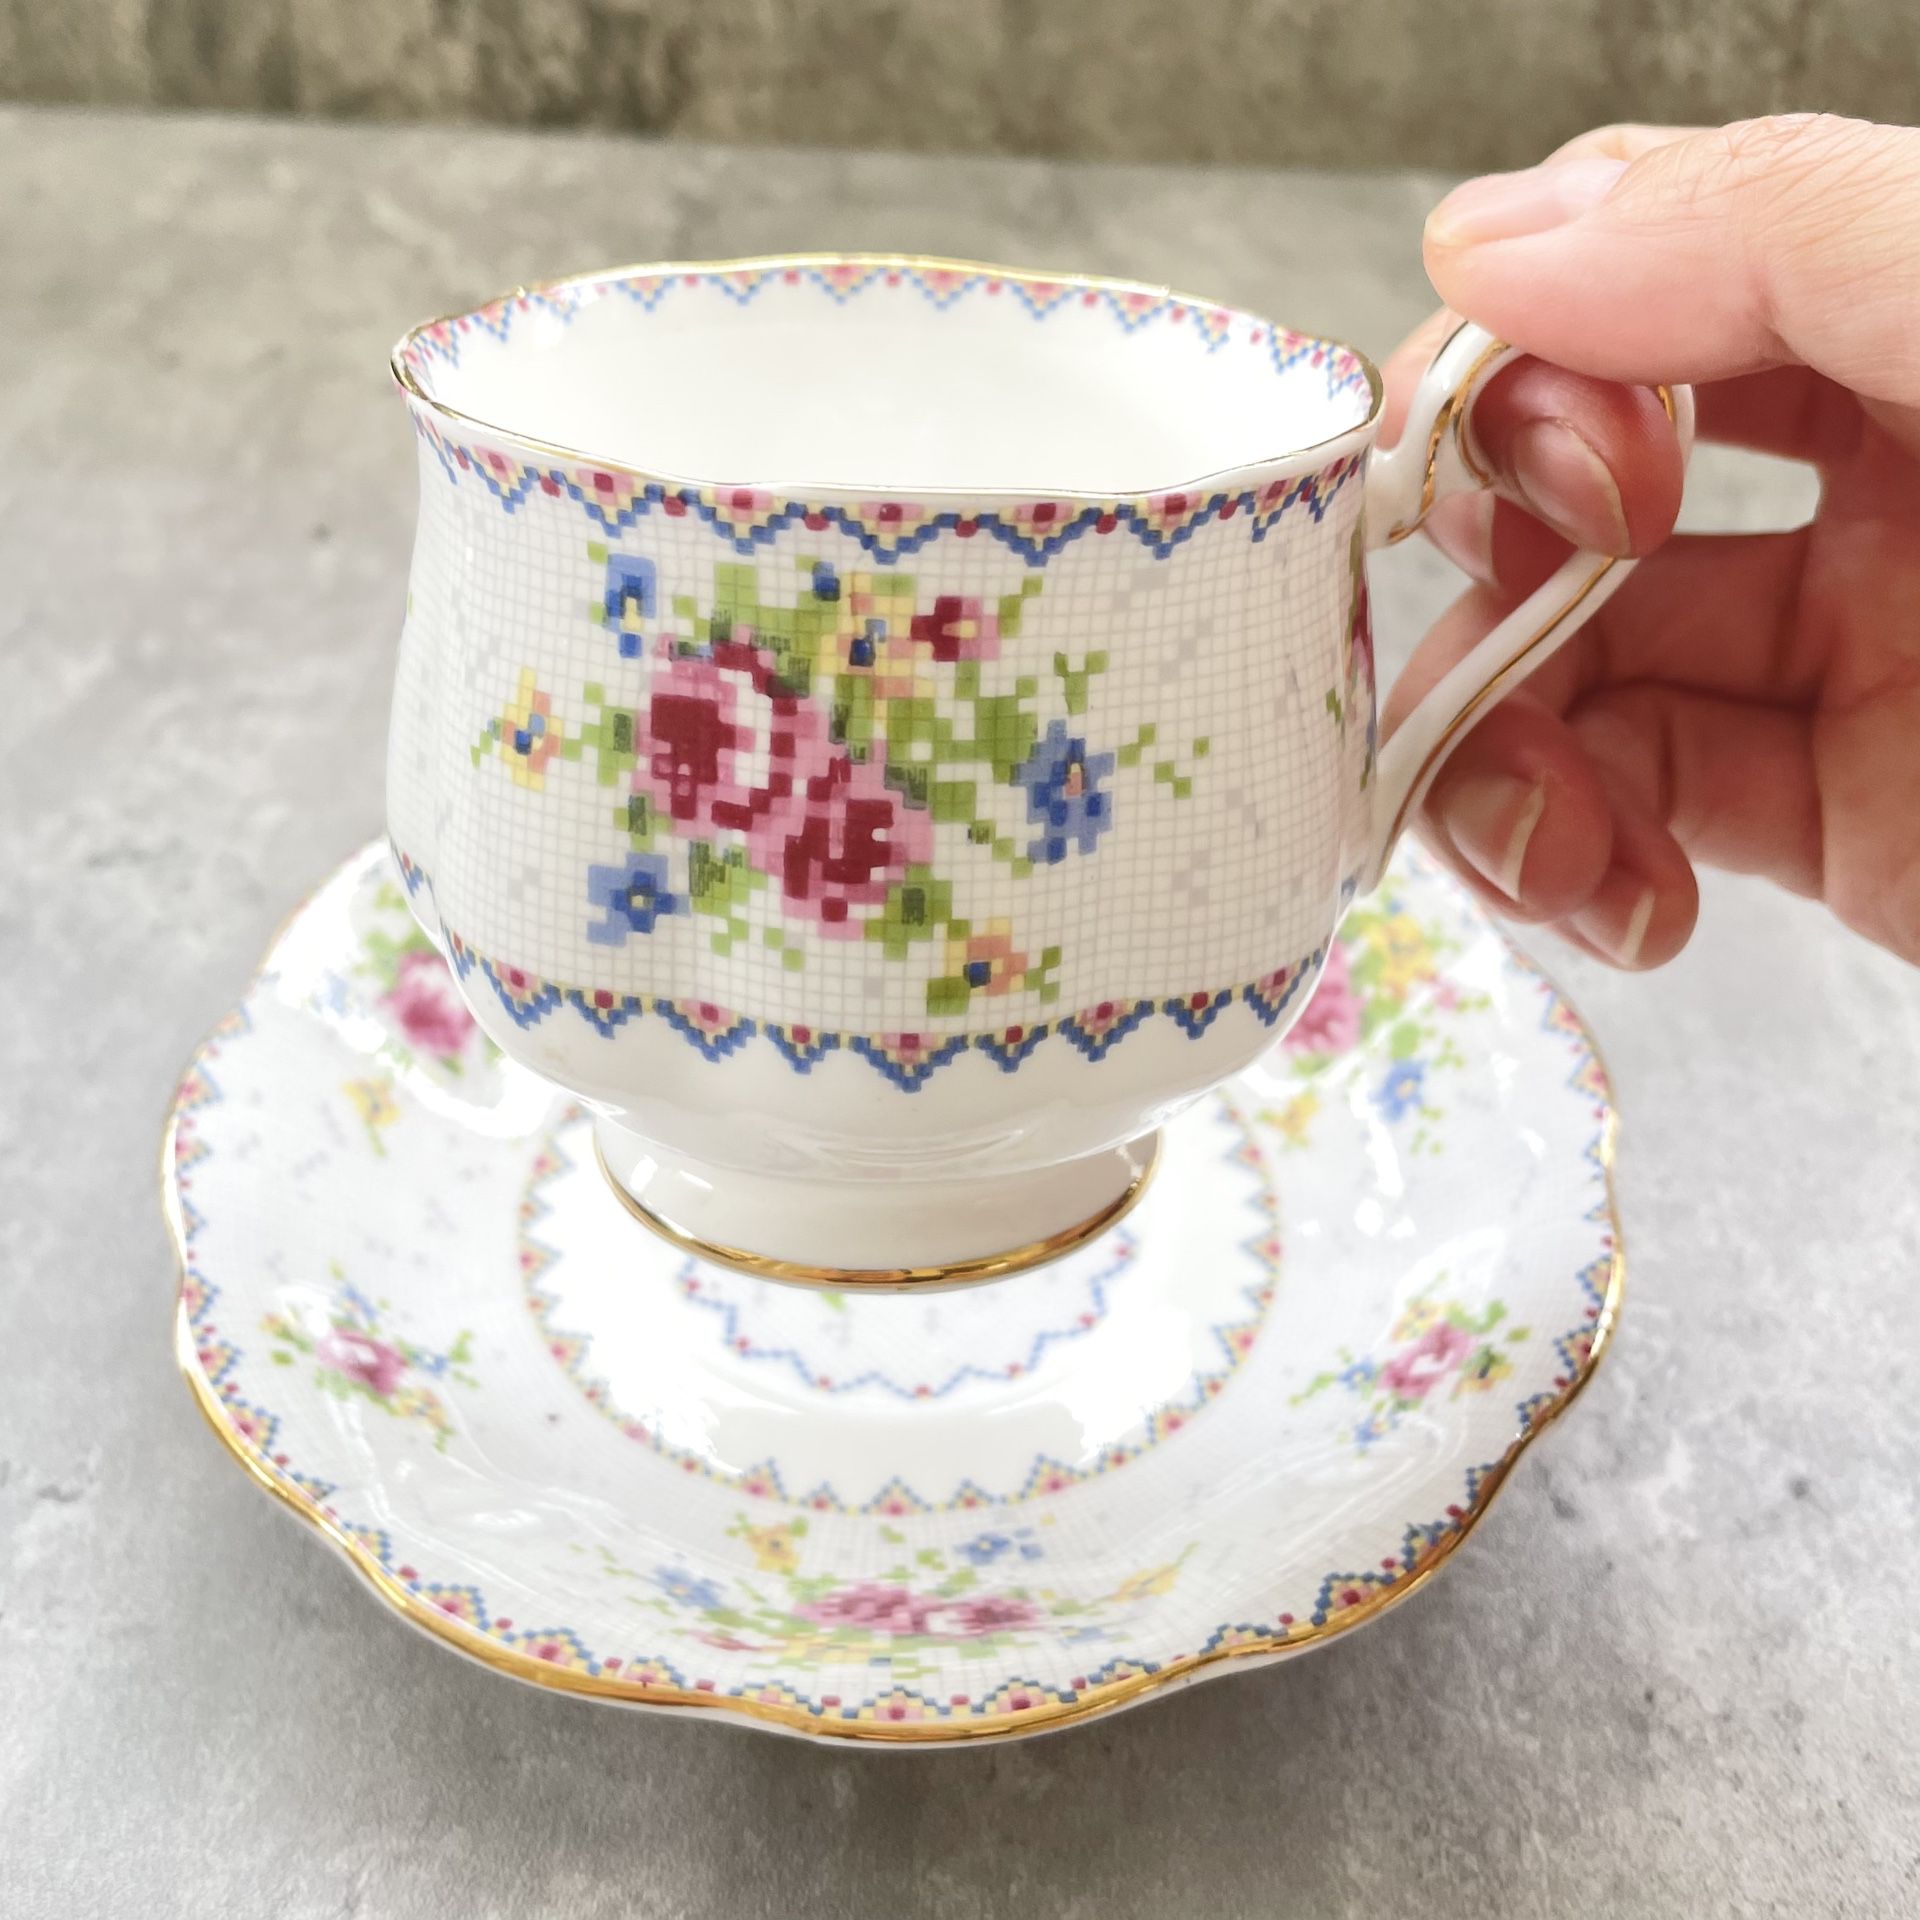 Vtg Royal Albert England Petit Point Bone China Tea Cup Saucer Set Floral